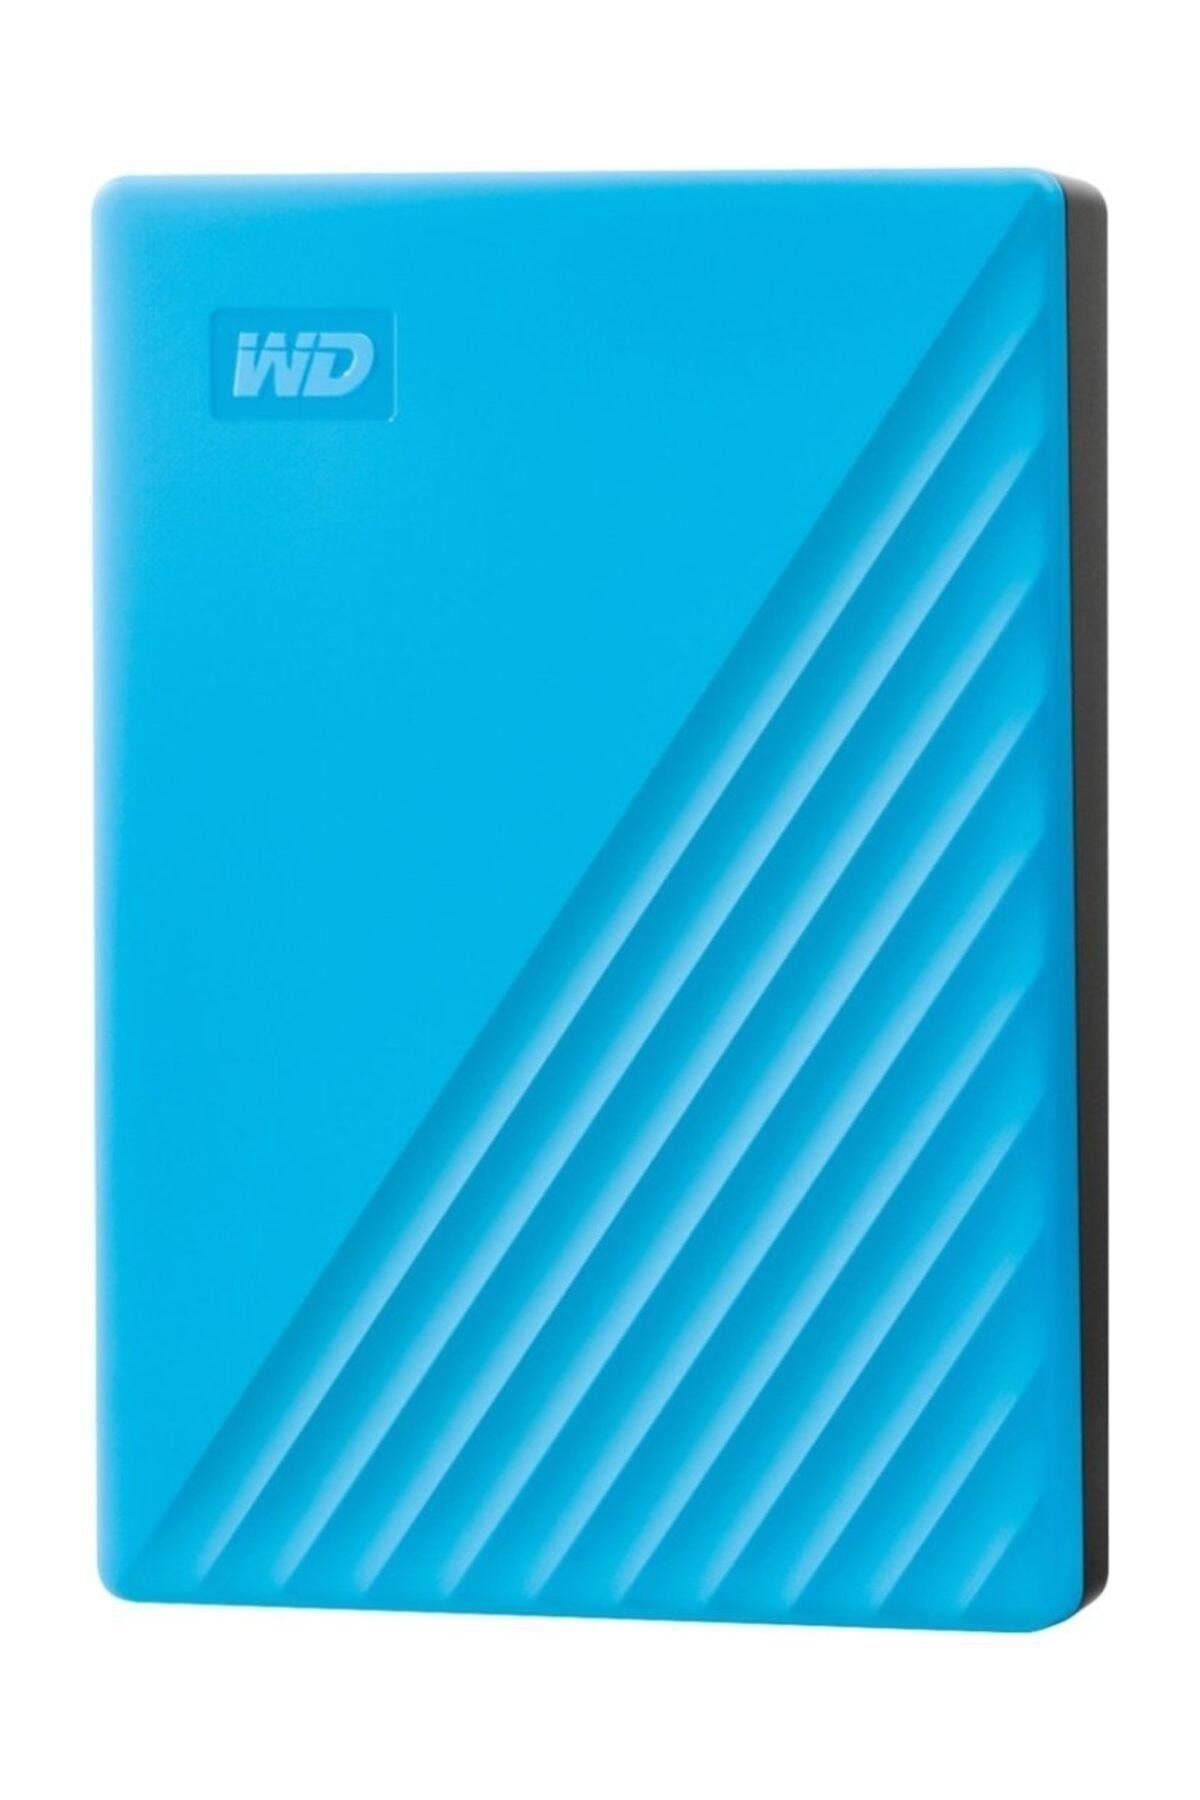 WD My Passport 4 TB 2.5'' USB 3.0 Taşınabilir Disk WDBPKJ0040BBL-WESN